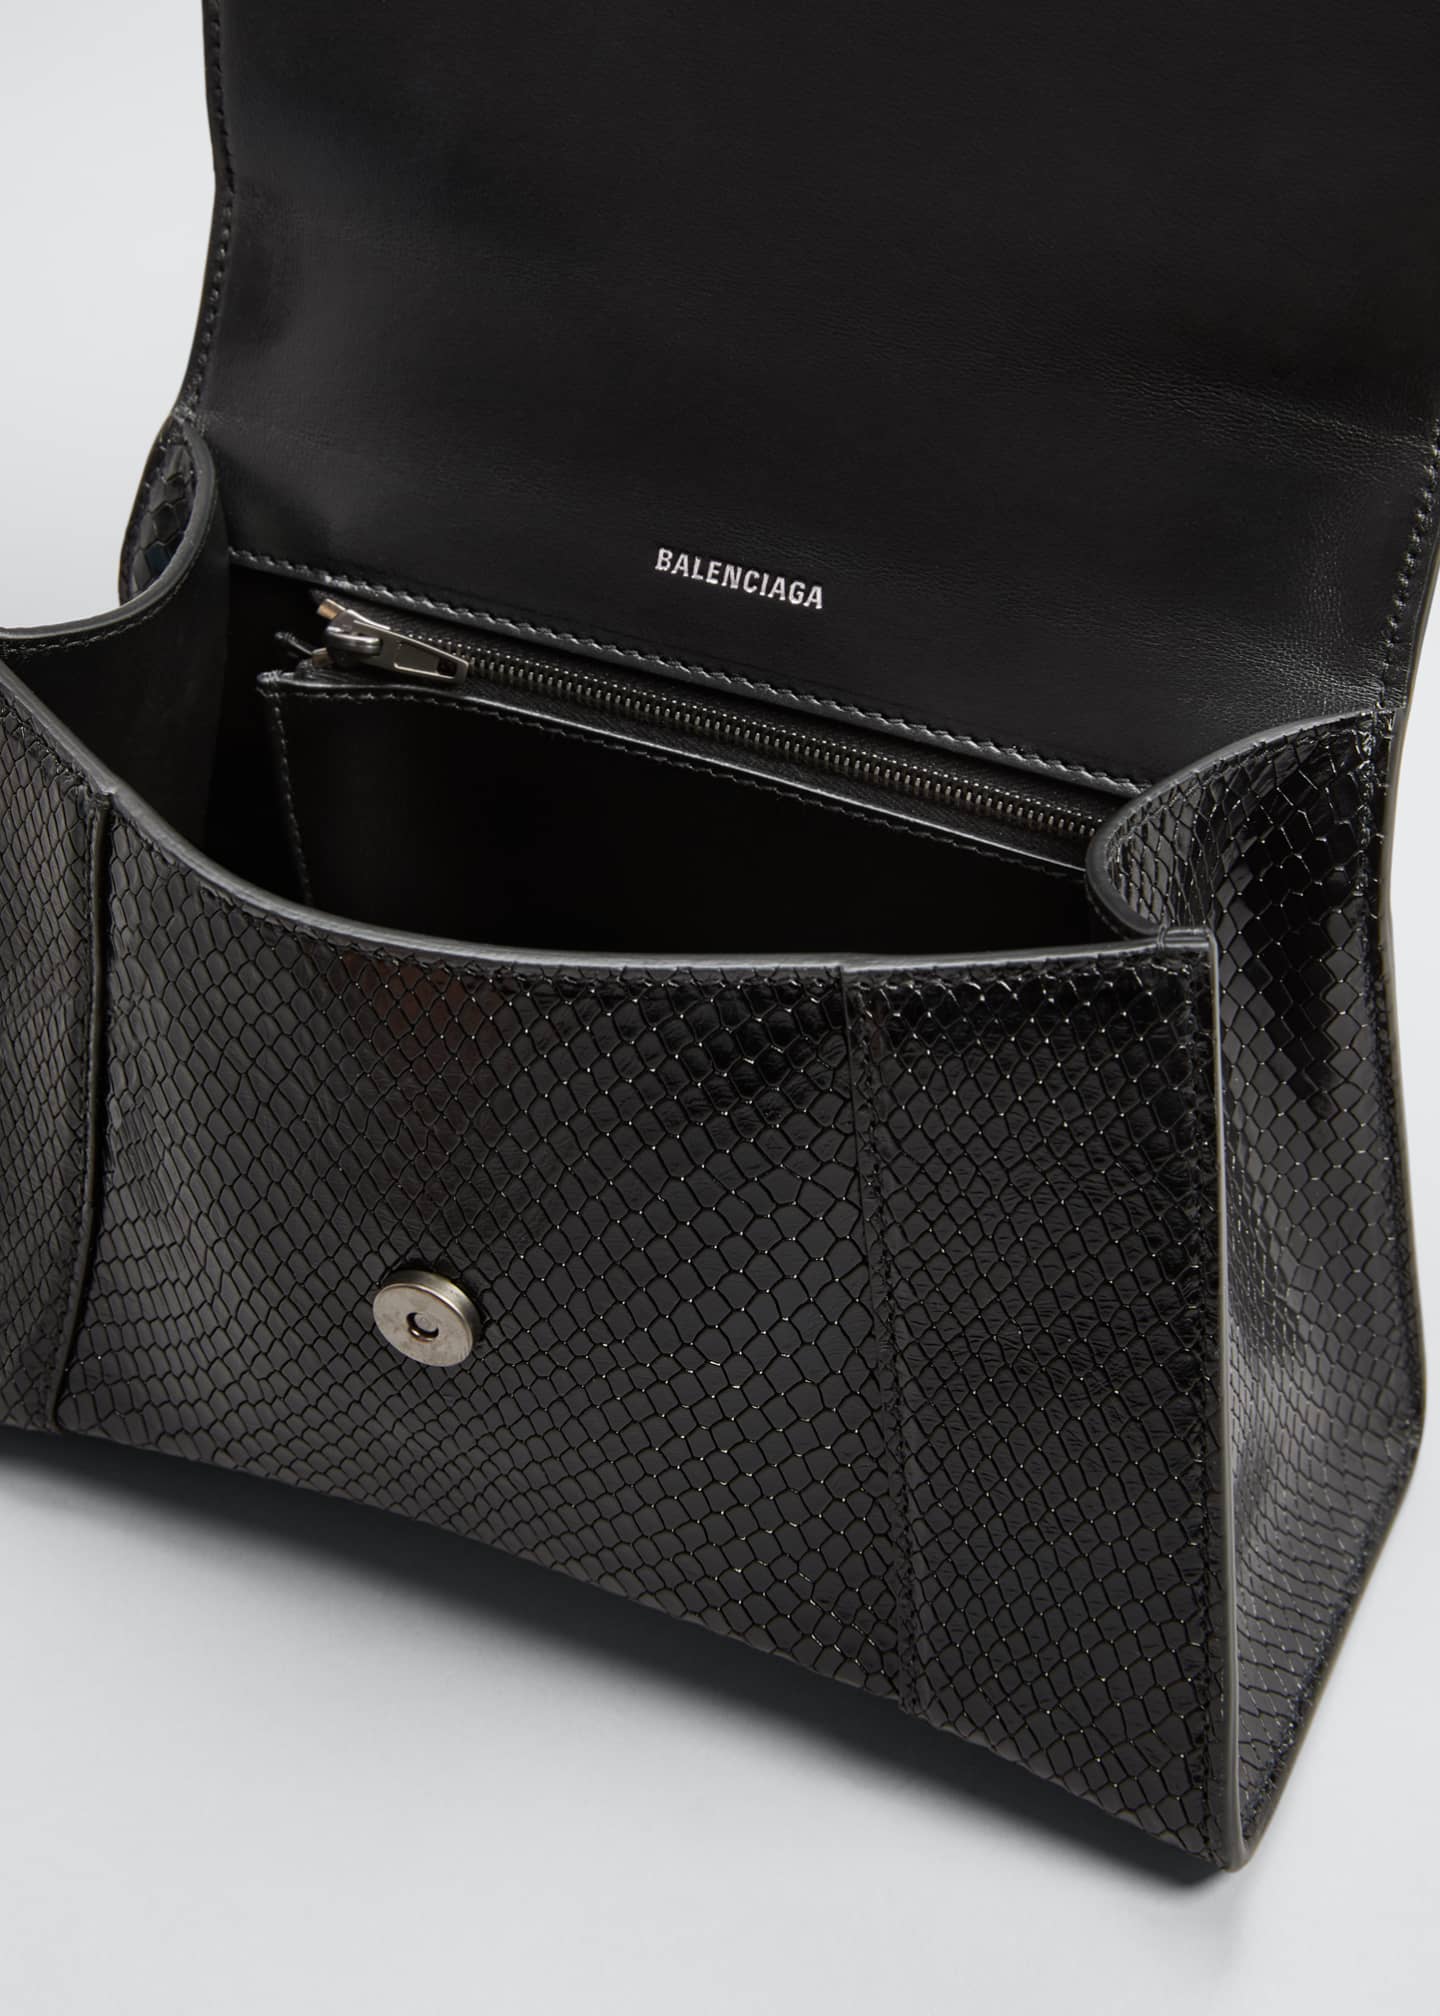 Balenciaga Hourglass Small Viper-Embossed Top-Handle Bag - Bergdorf Goodman